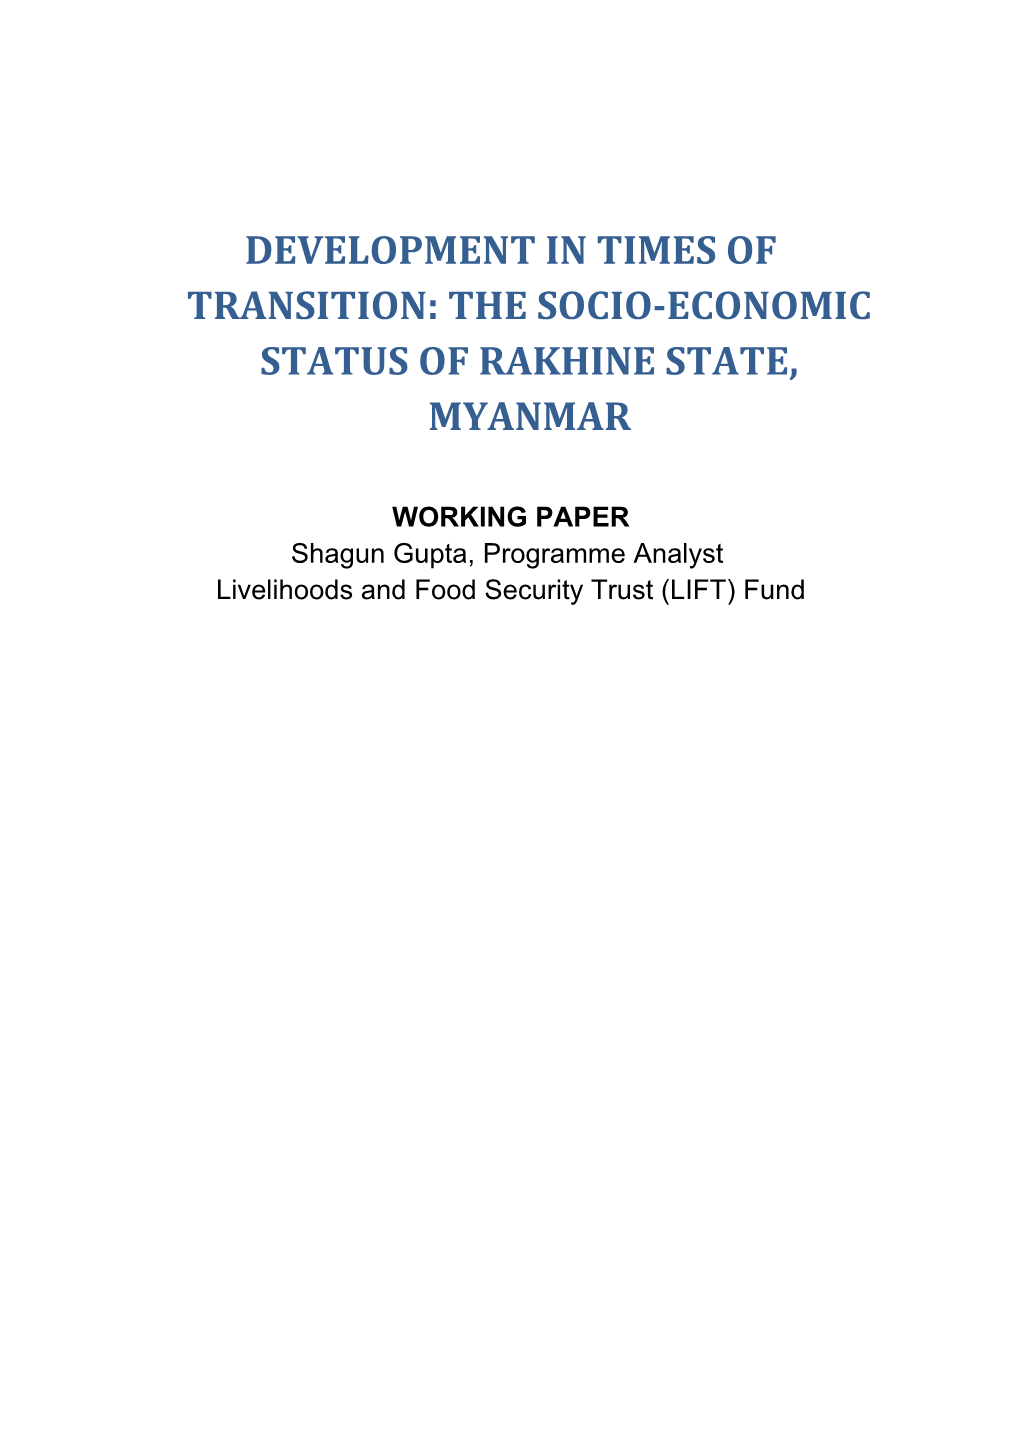 Development in Times of Transition: the Socio-Economic Status of Rakhine State, Myanmar